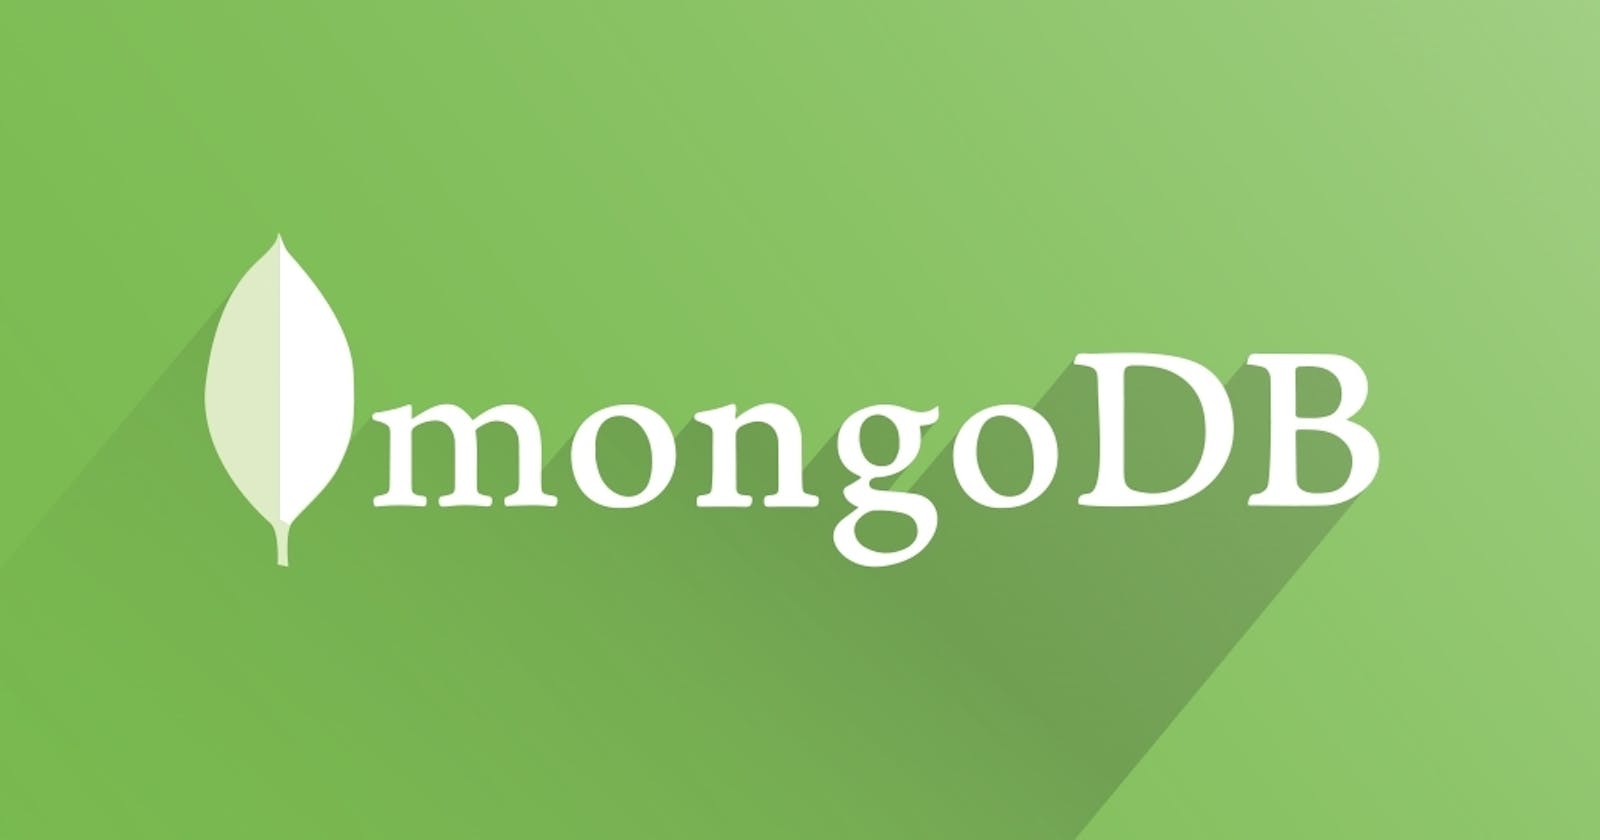 MongoDB, C# and DateTimeOffset